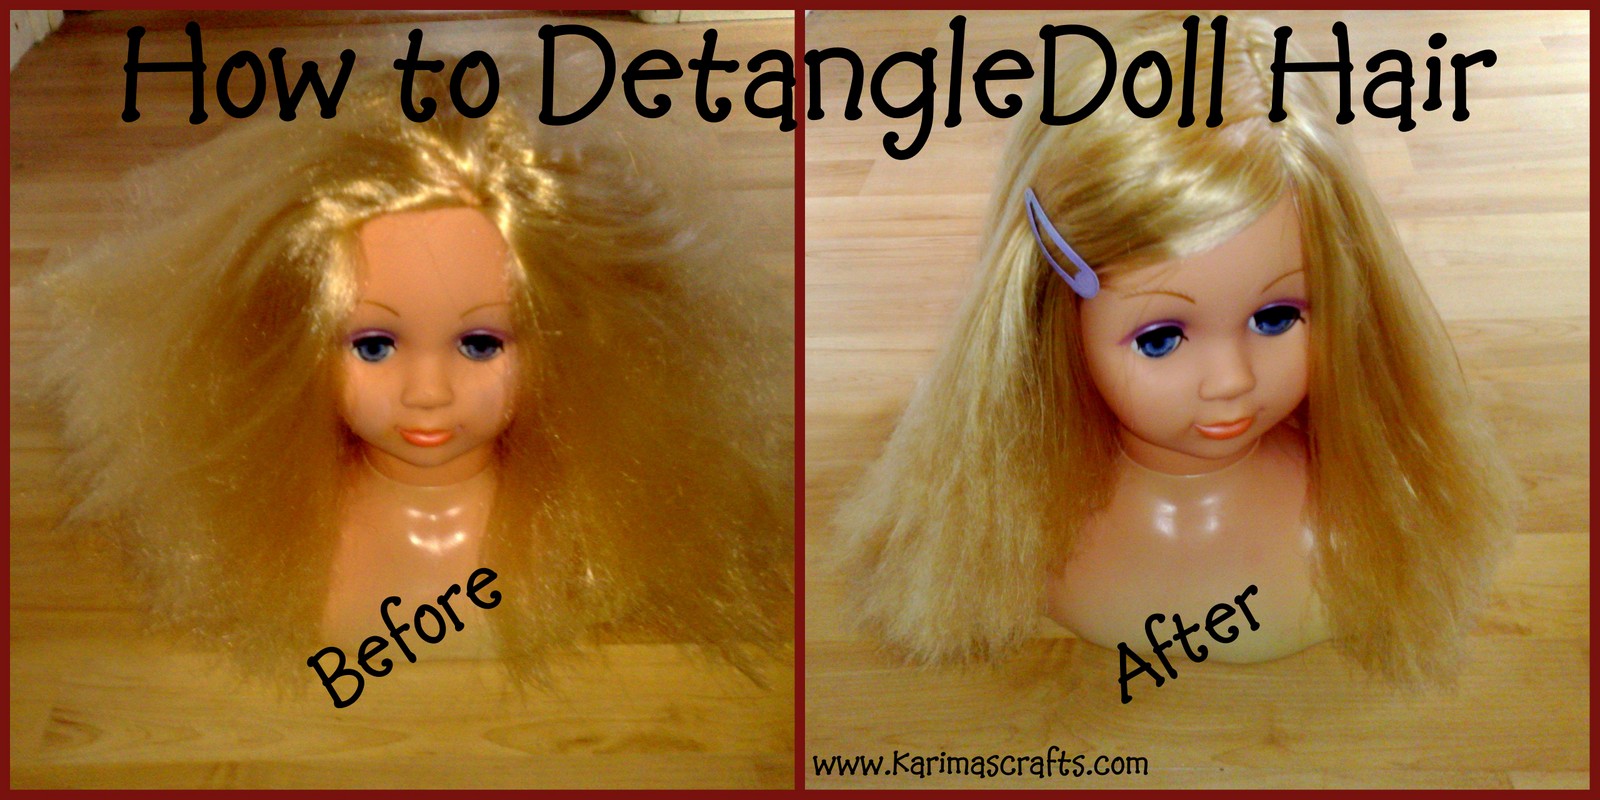 Karimas Crafts How To Detangle Doll Hair Tutorial